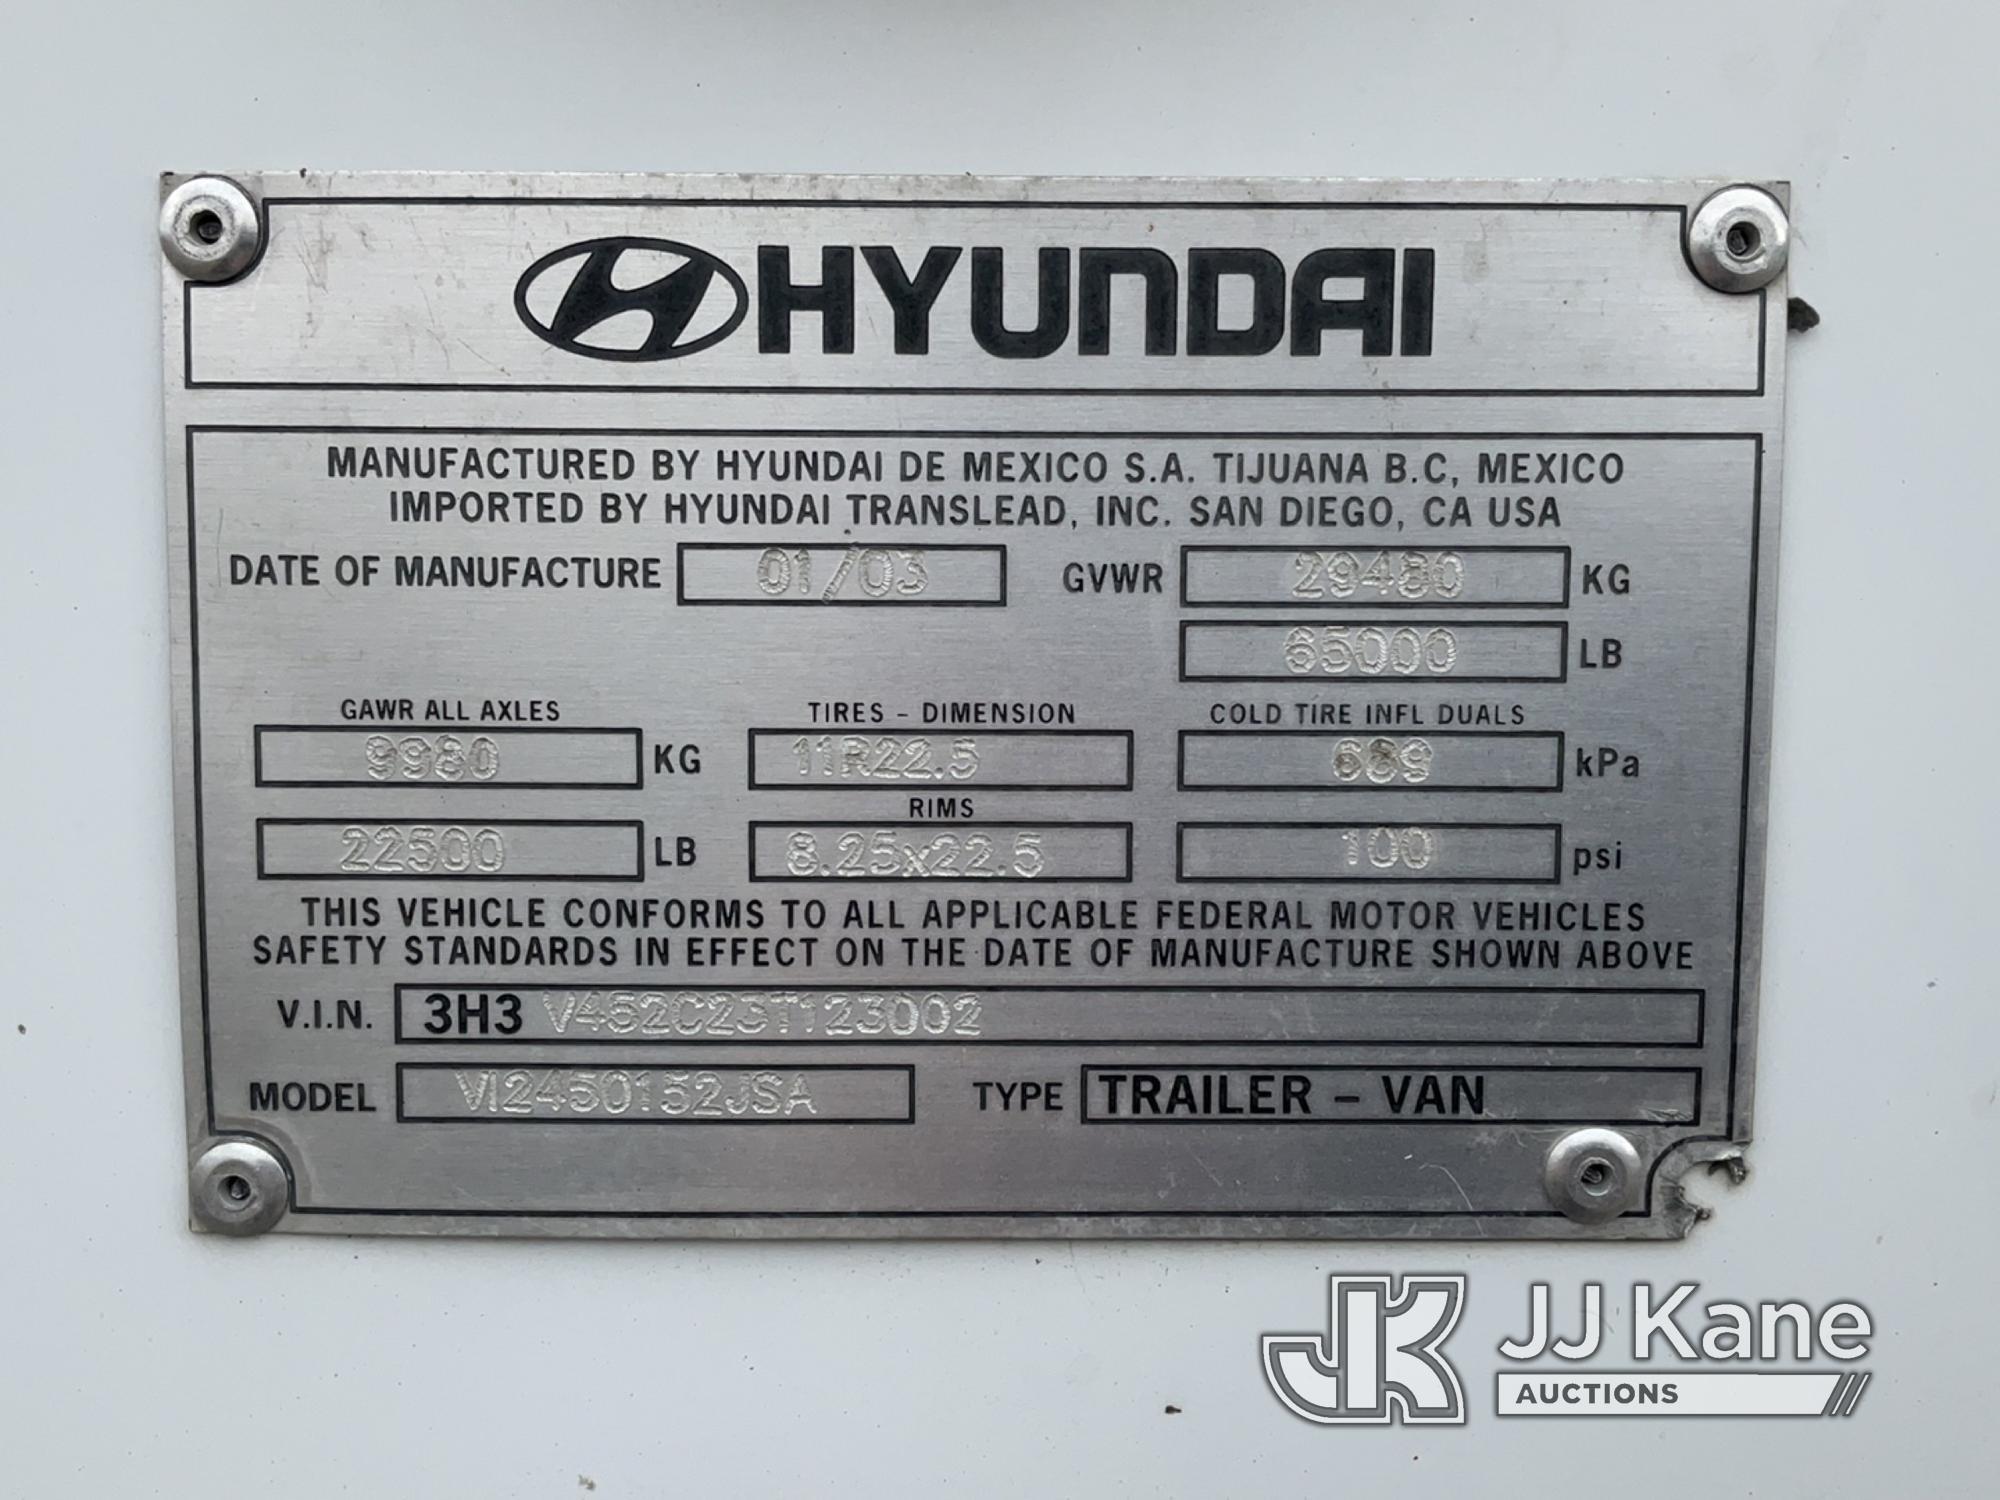 (South Beloit, IL) 2003 Hyundai Translead V12450152JSA T/A Van Body Trailer Seller States-5th wheel